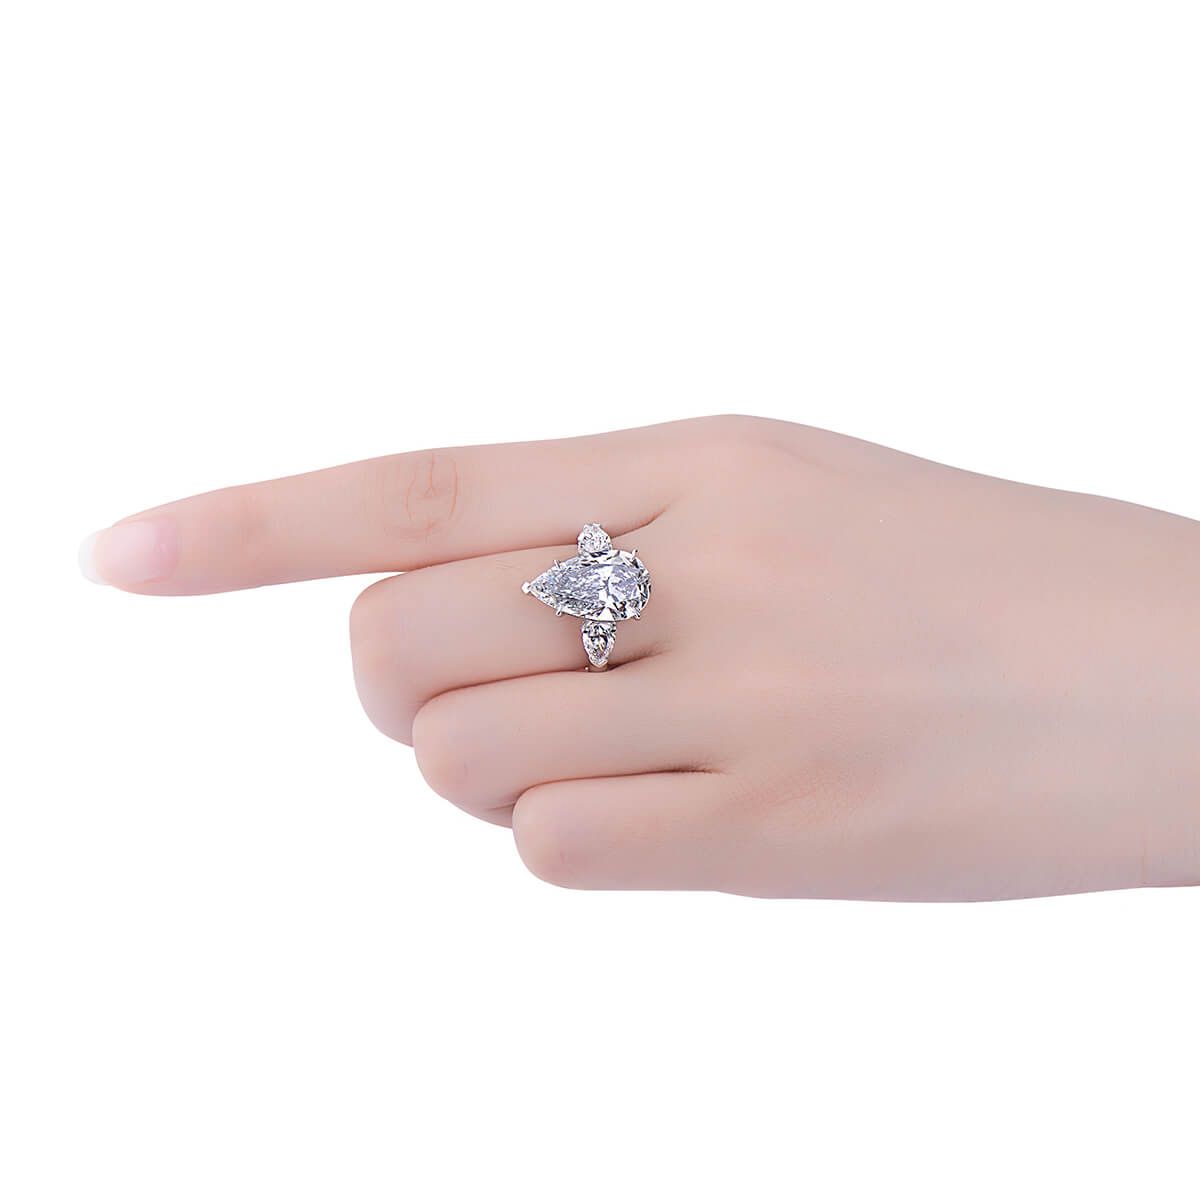  White Diamond Ring, 5.03 Ct. (6.03 Ct. TW), Pear shape, GIA Certified, 5192045633